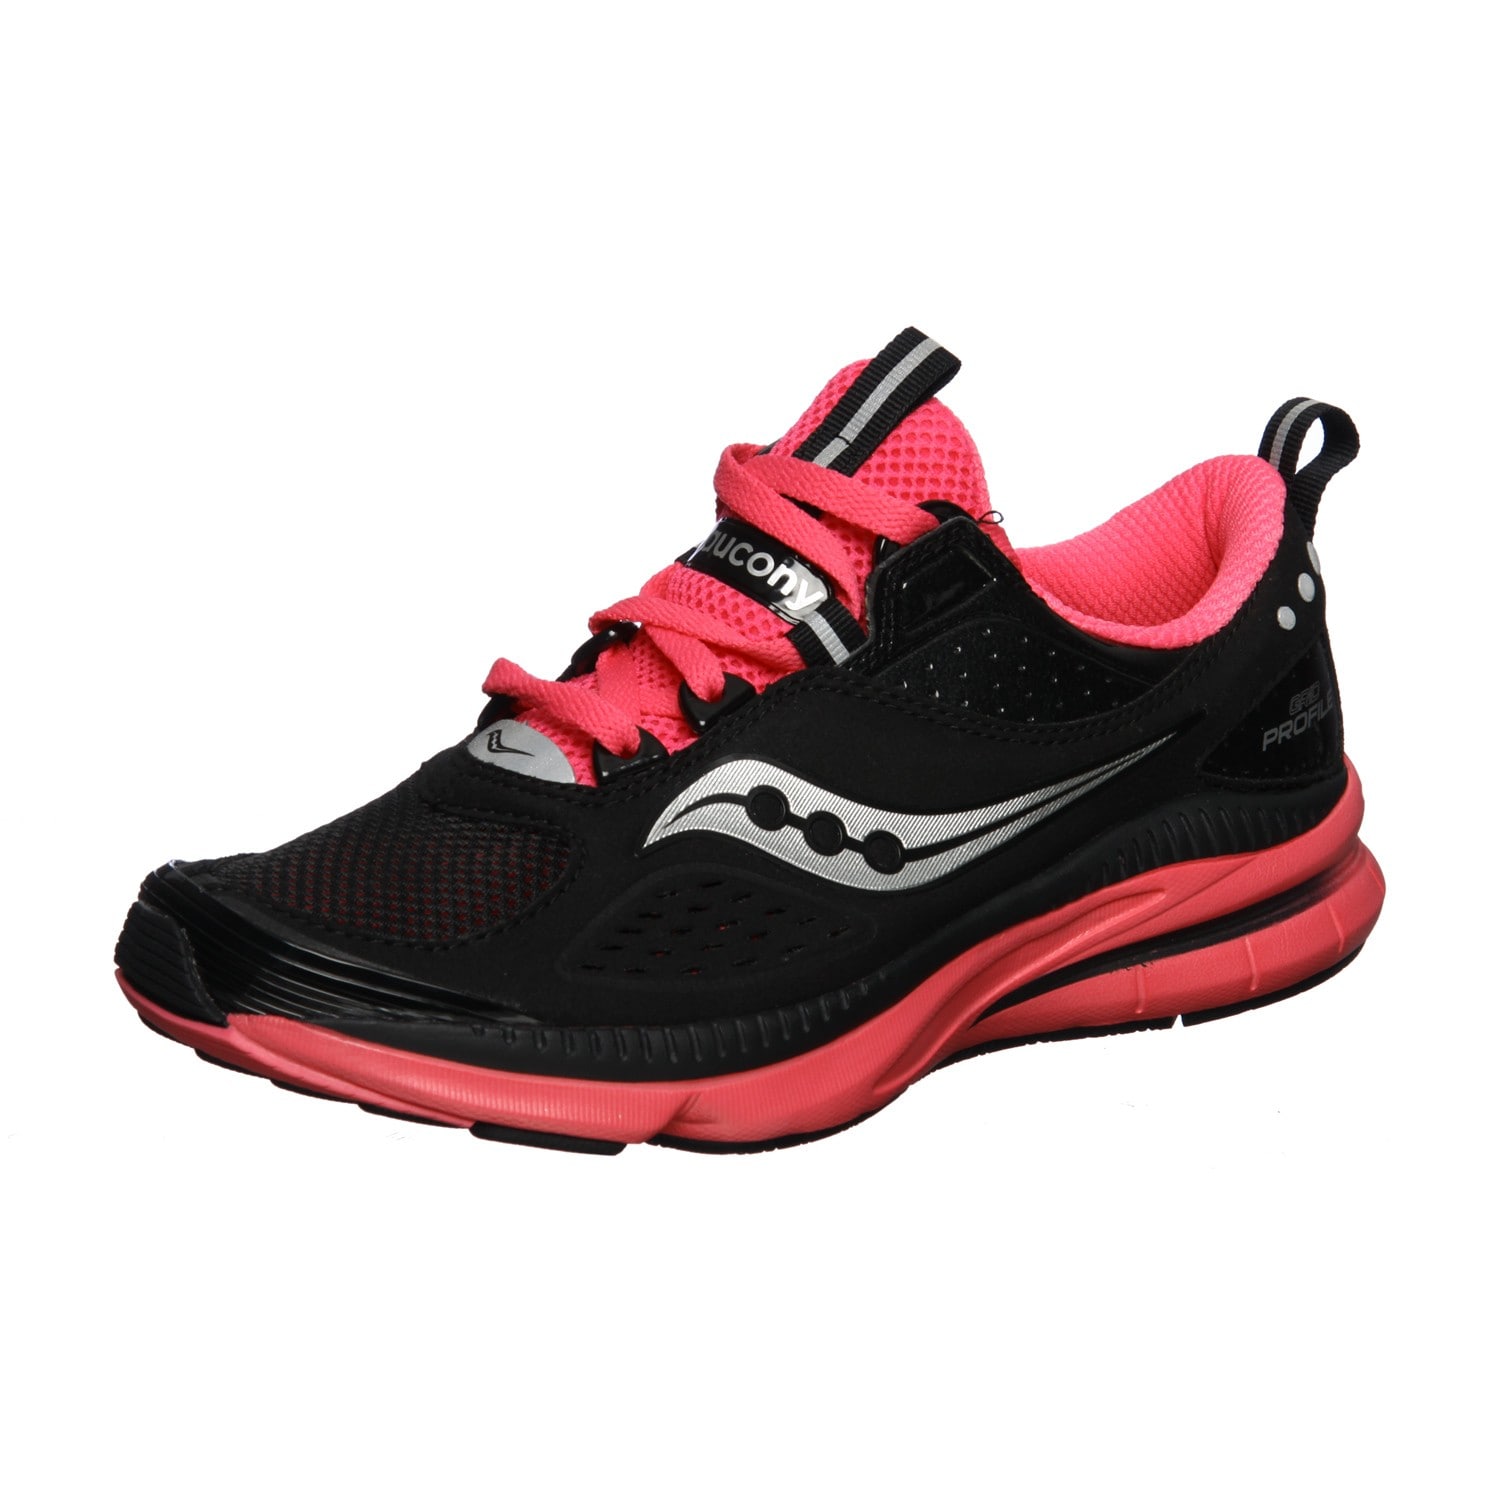 Grid Profile' Black/Pink Running Shoes 